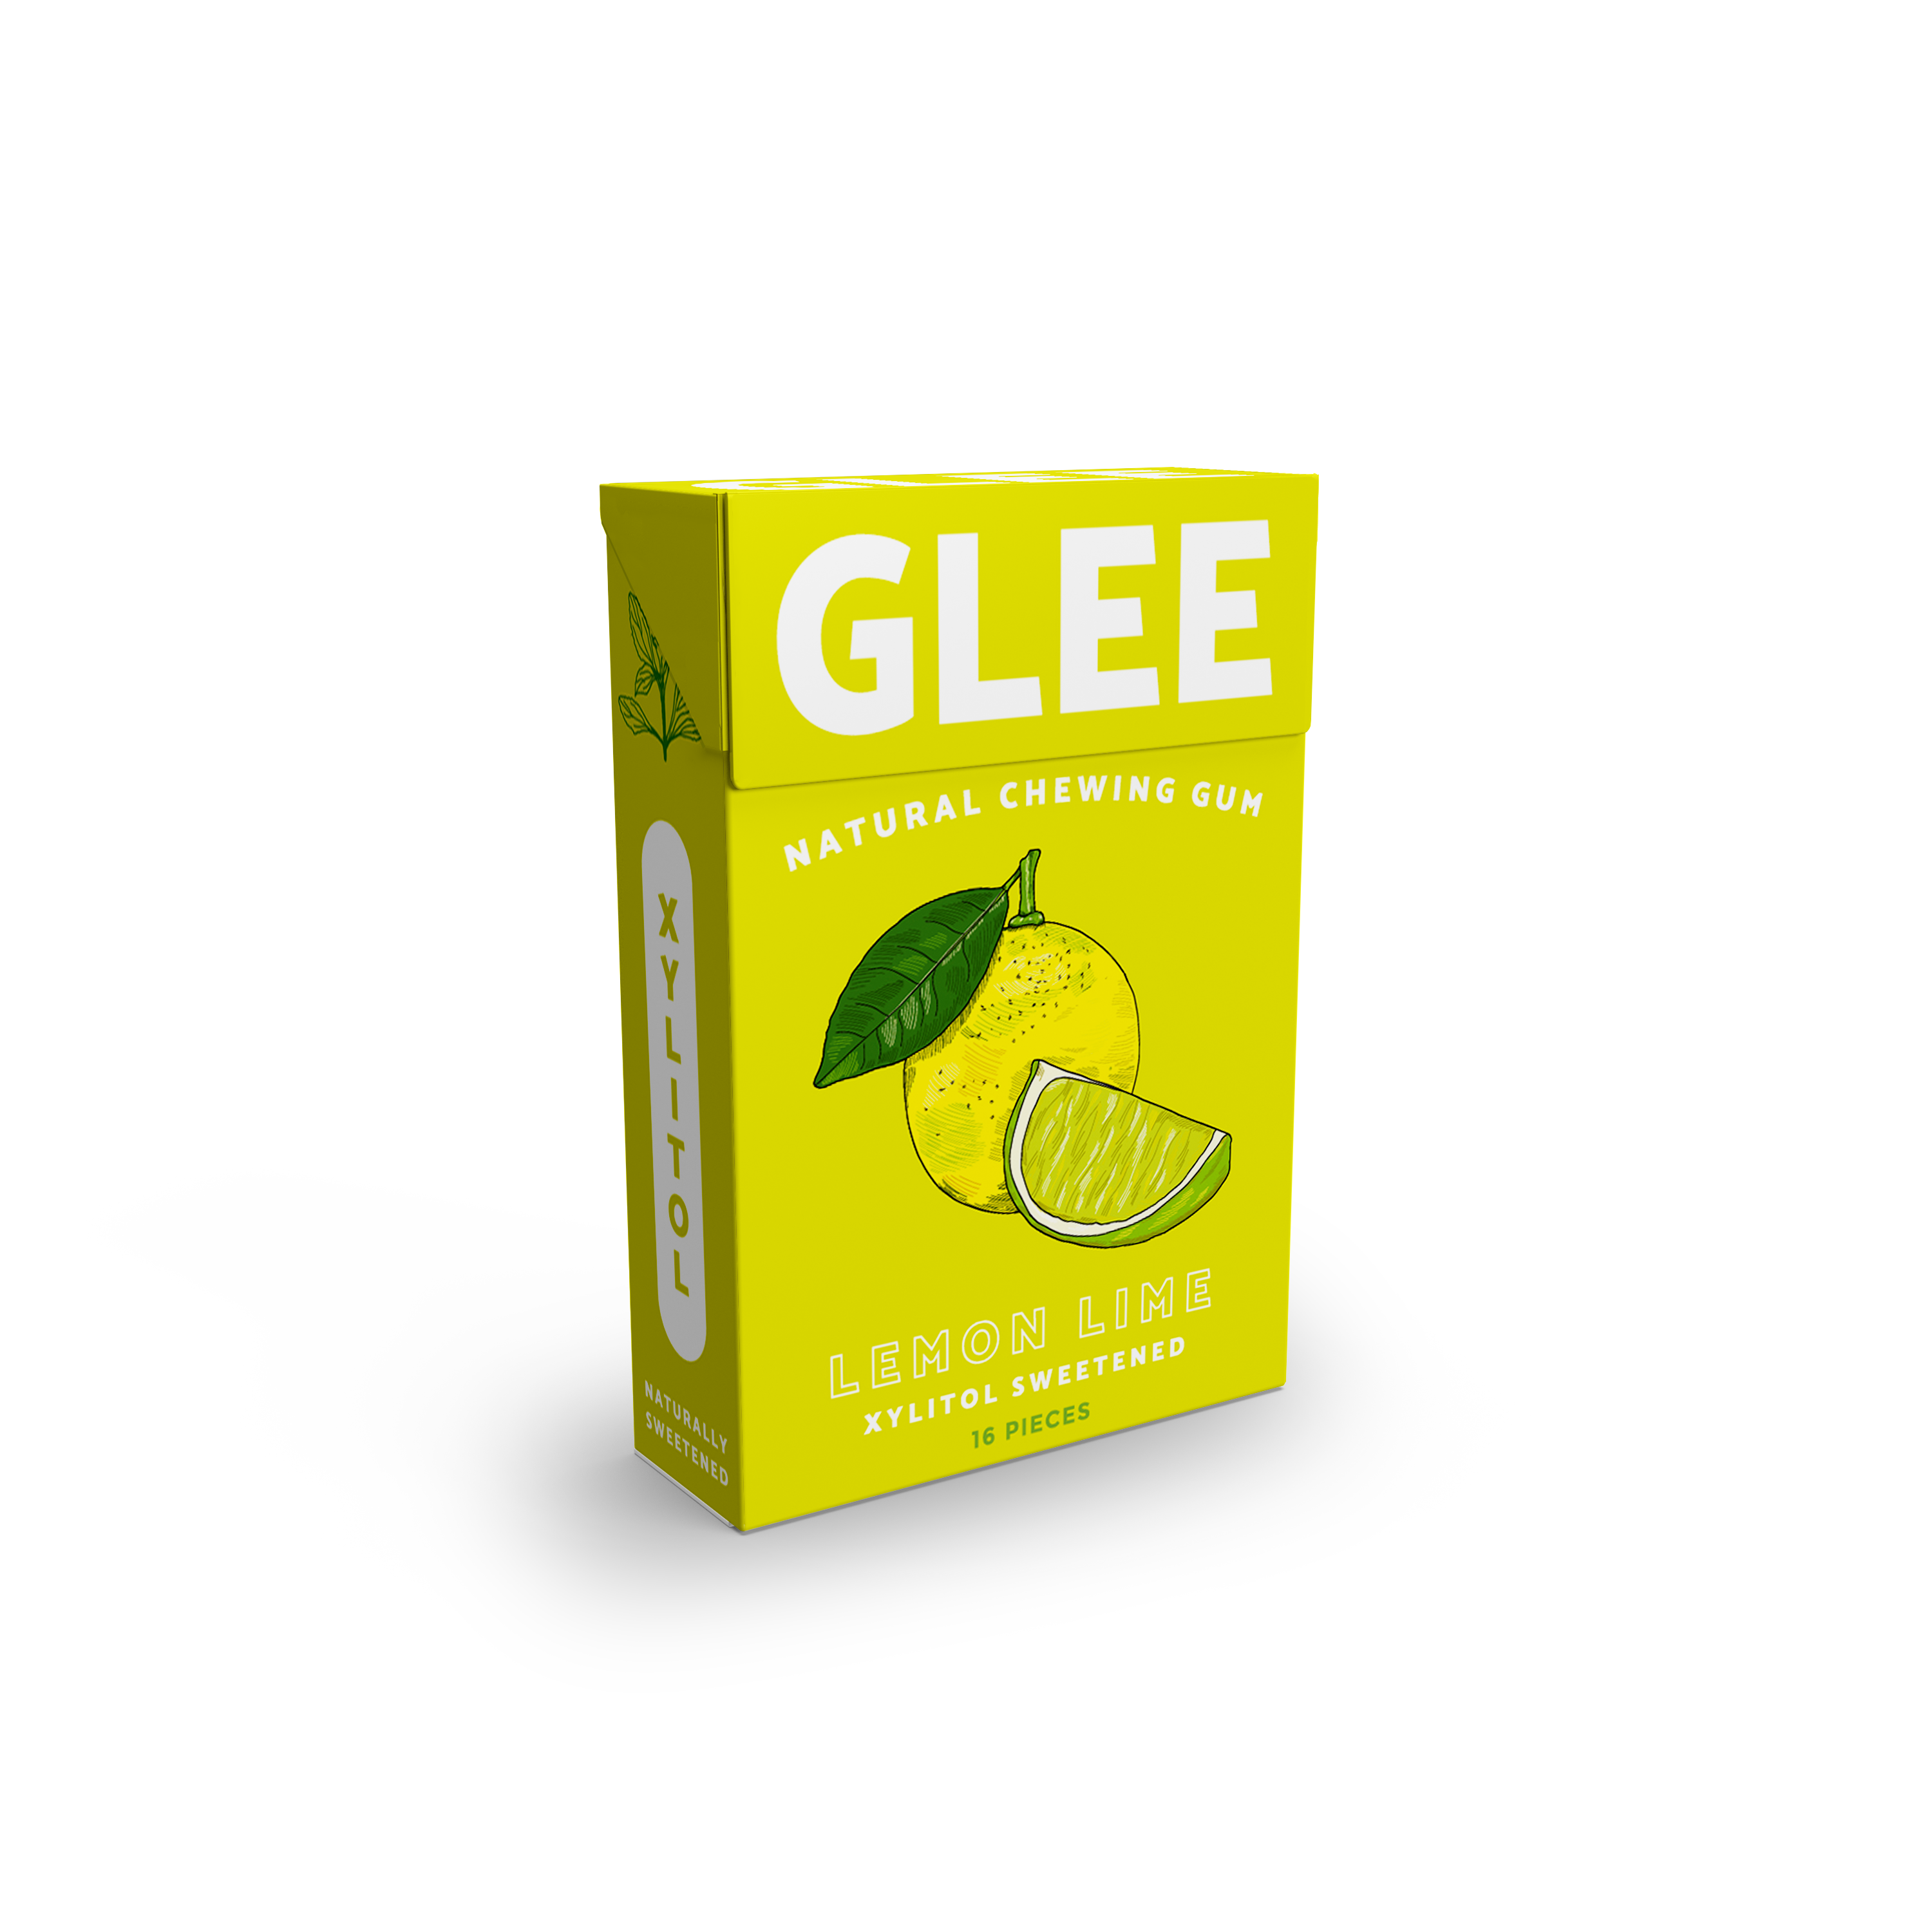 Glee-Top Flip Box-34-4